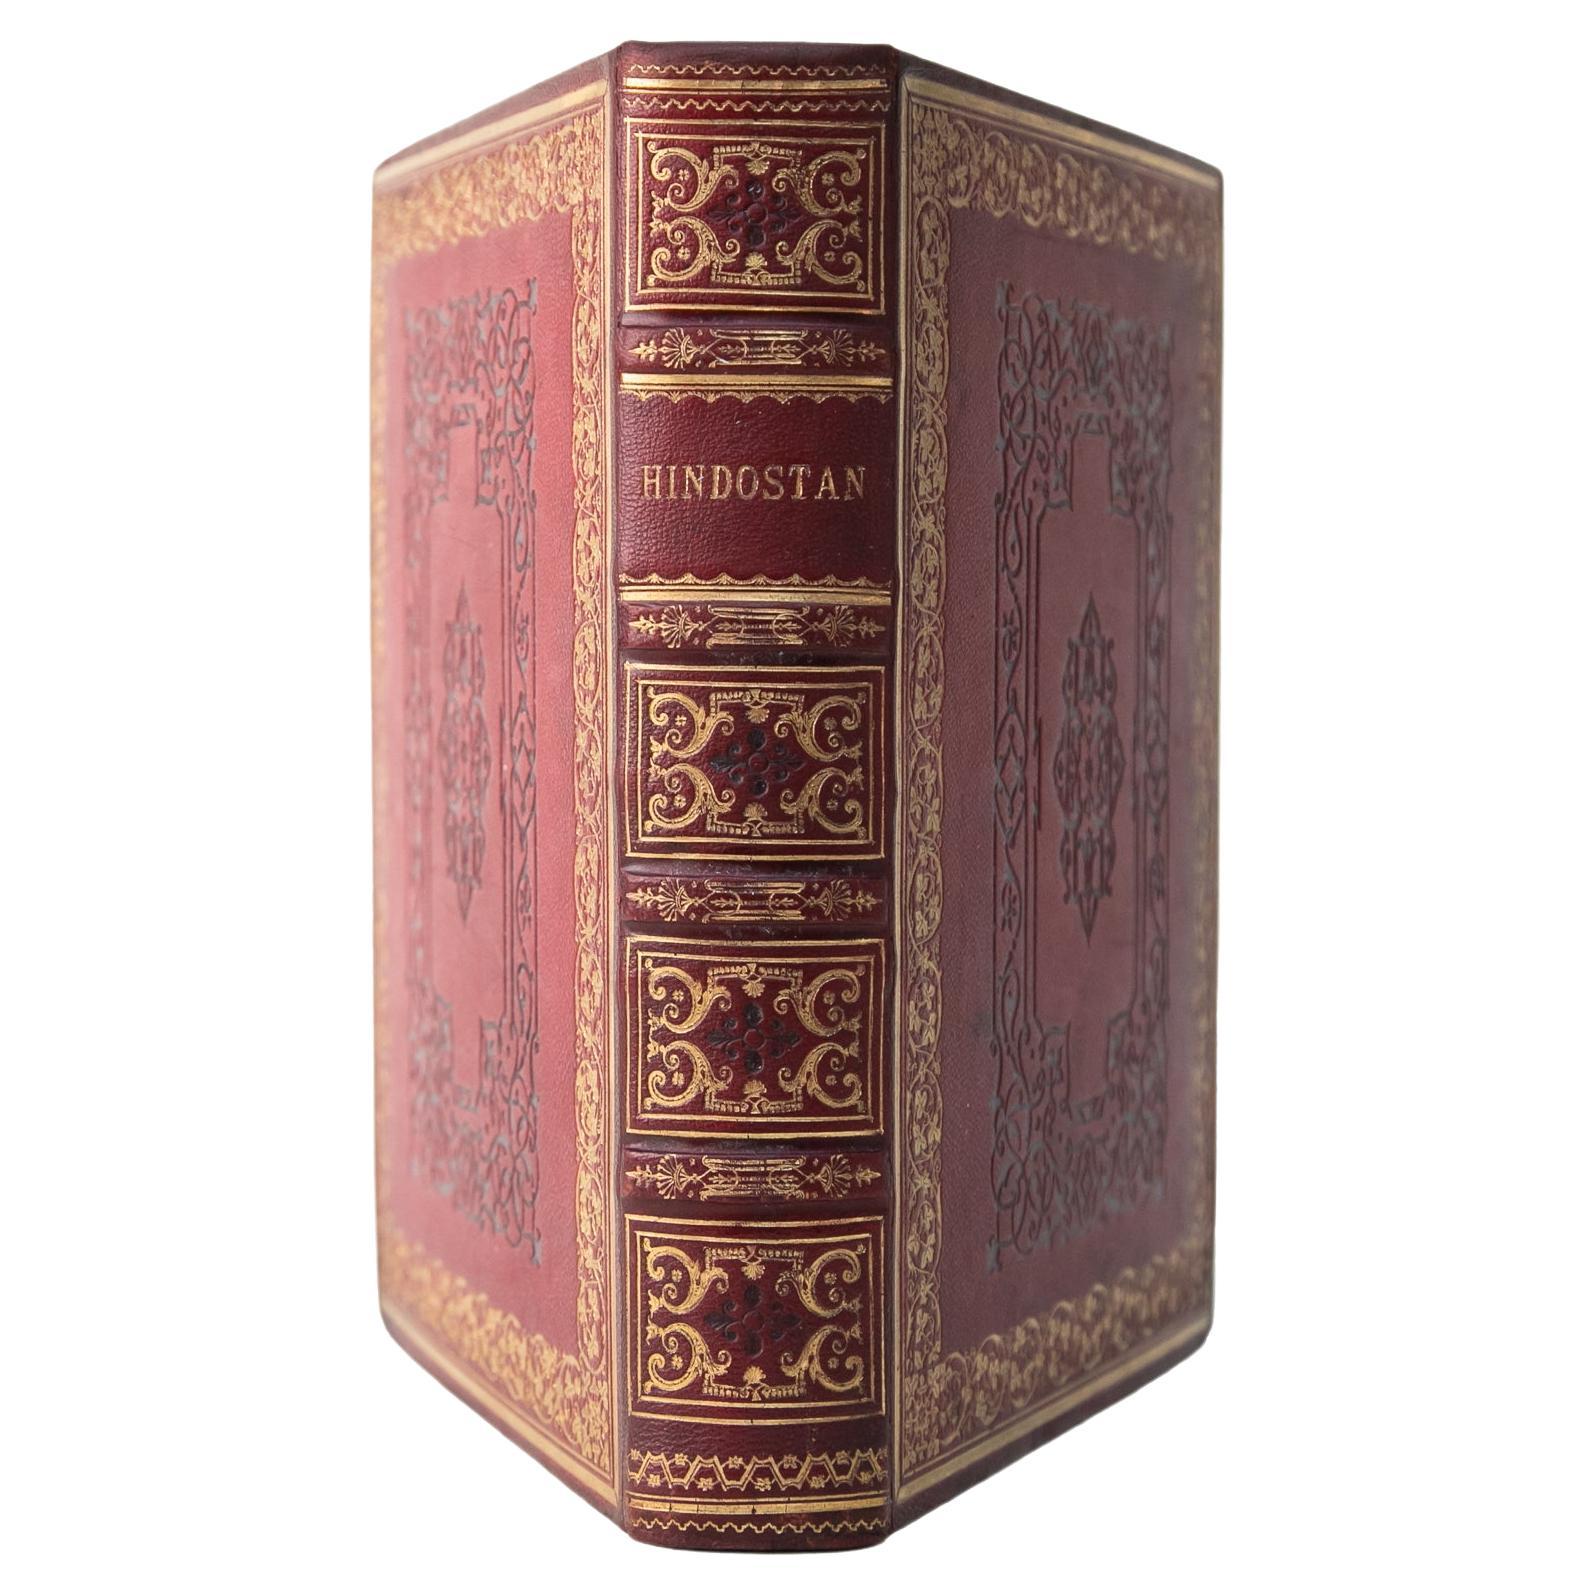 1 Volume. Emma Roberts, Hindostan. For Sale